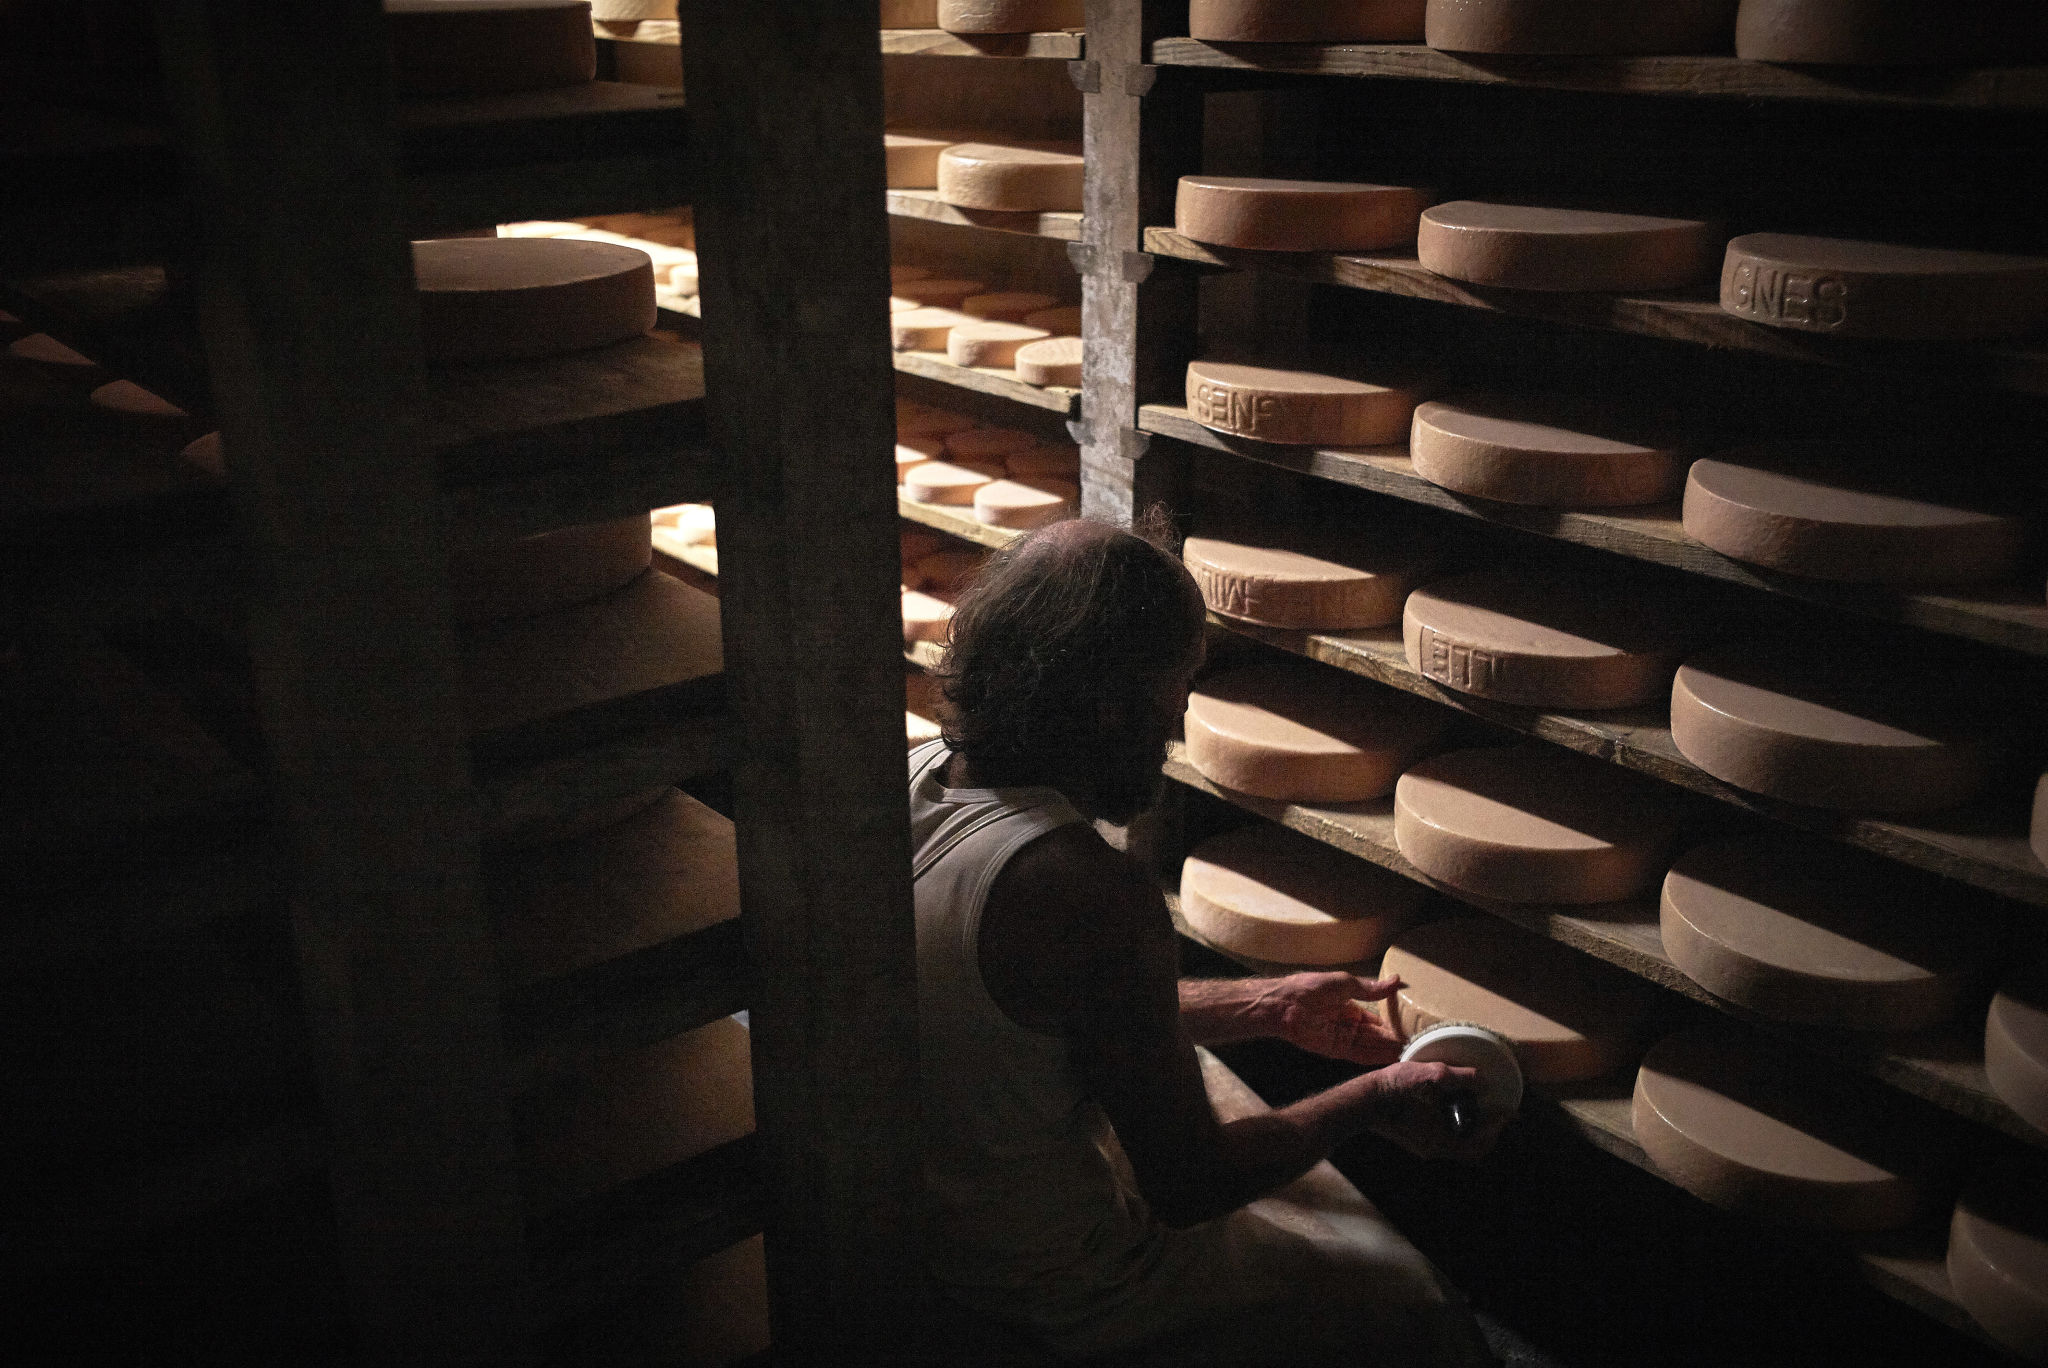 Maturing of raclette cheeses, Valais, Switzerland